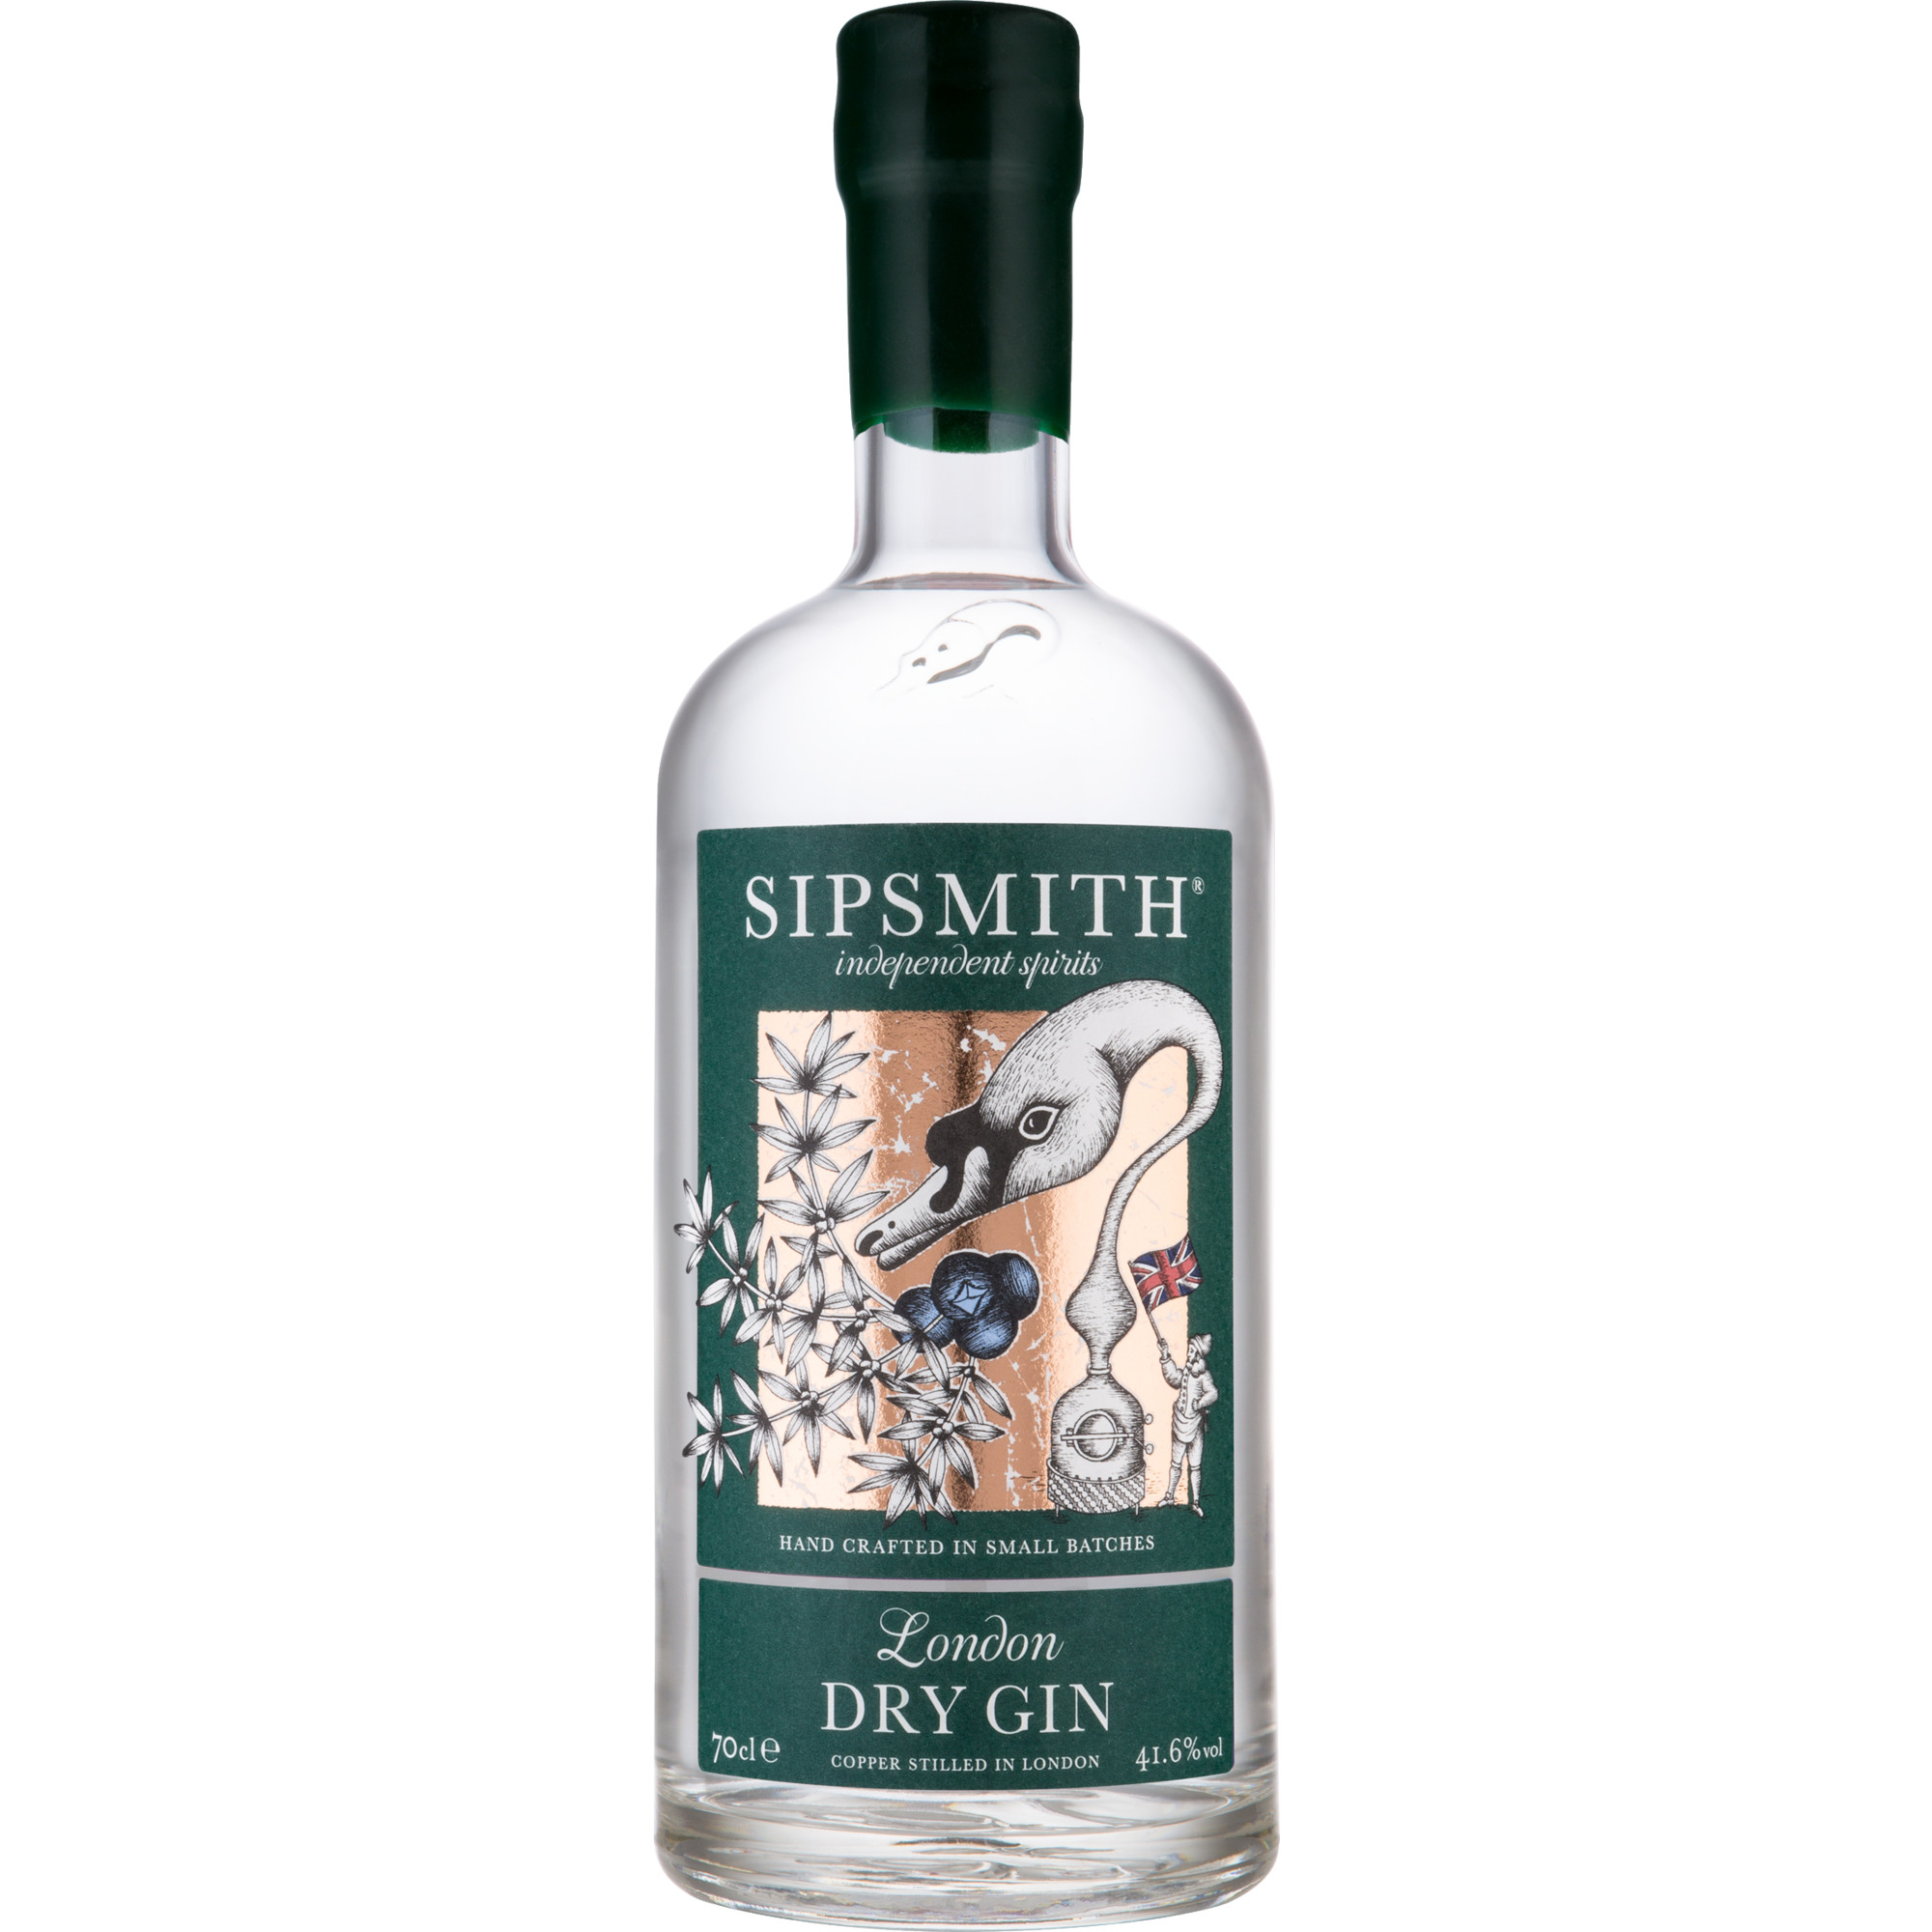 Sipsmith London Dry Gin, 0,7 L, 41,6% Vol., England, Spirituosen  Spirituosen Hawesko